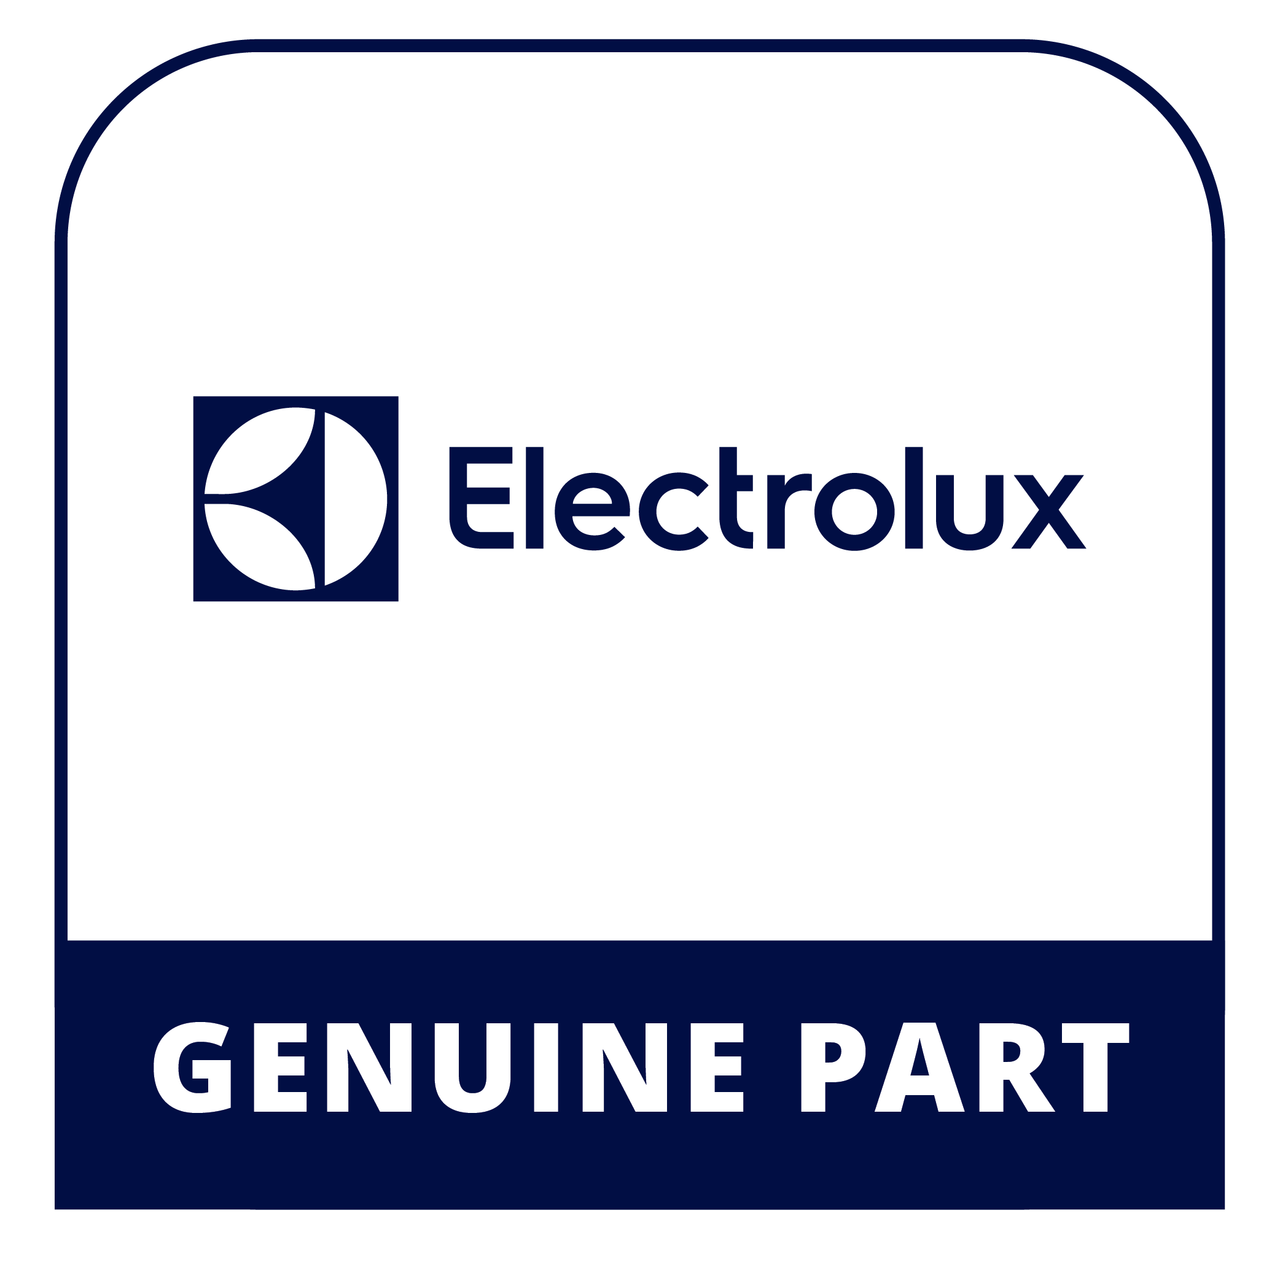 Frigidaire - Electrolux 316267804 Trim - Genuine Electrolux Part